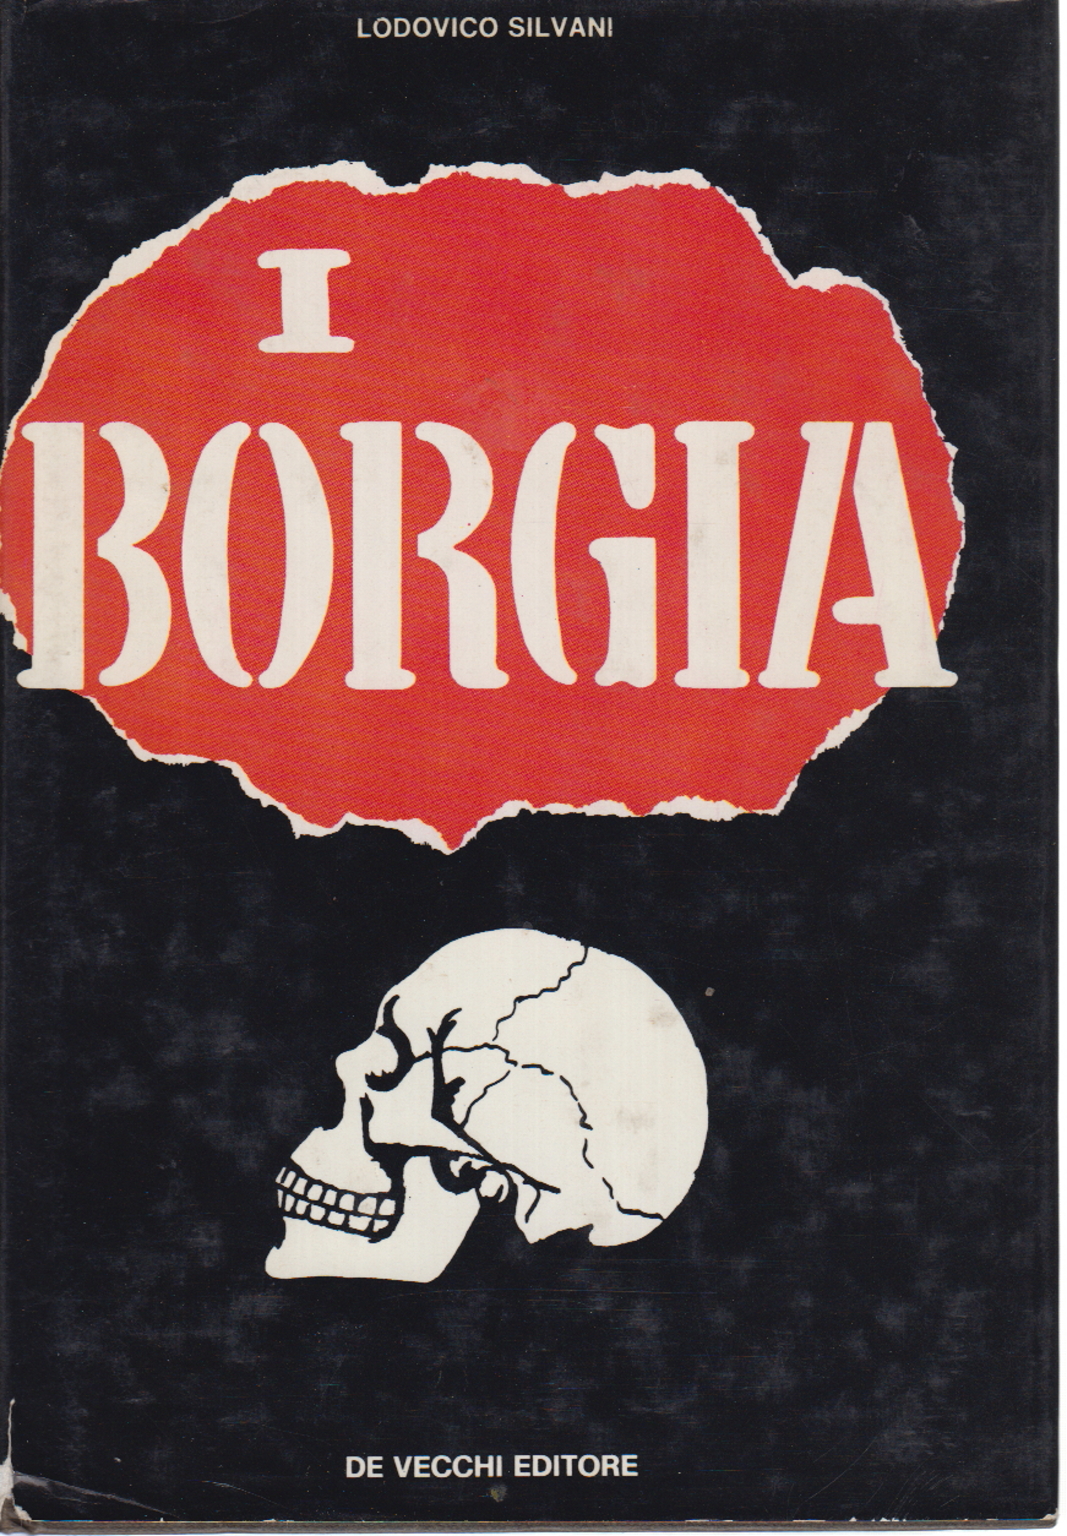 Borgia, Lodovico Silvani